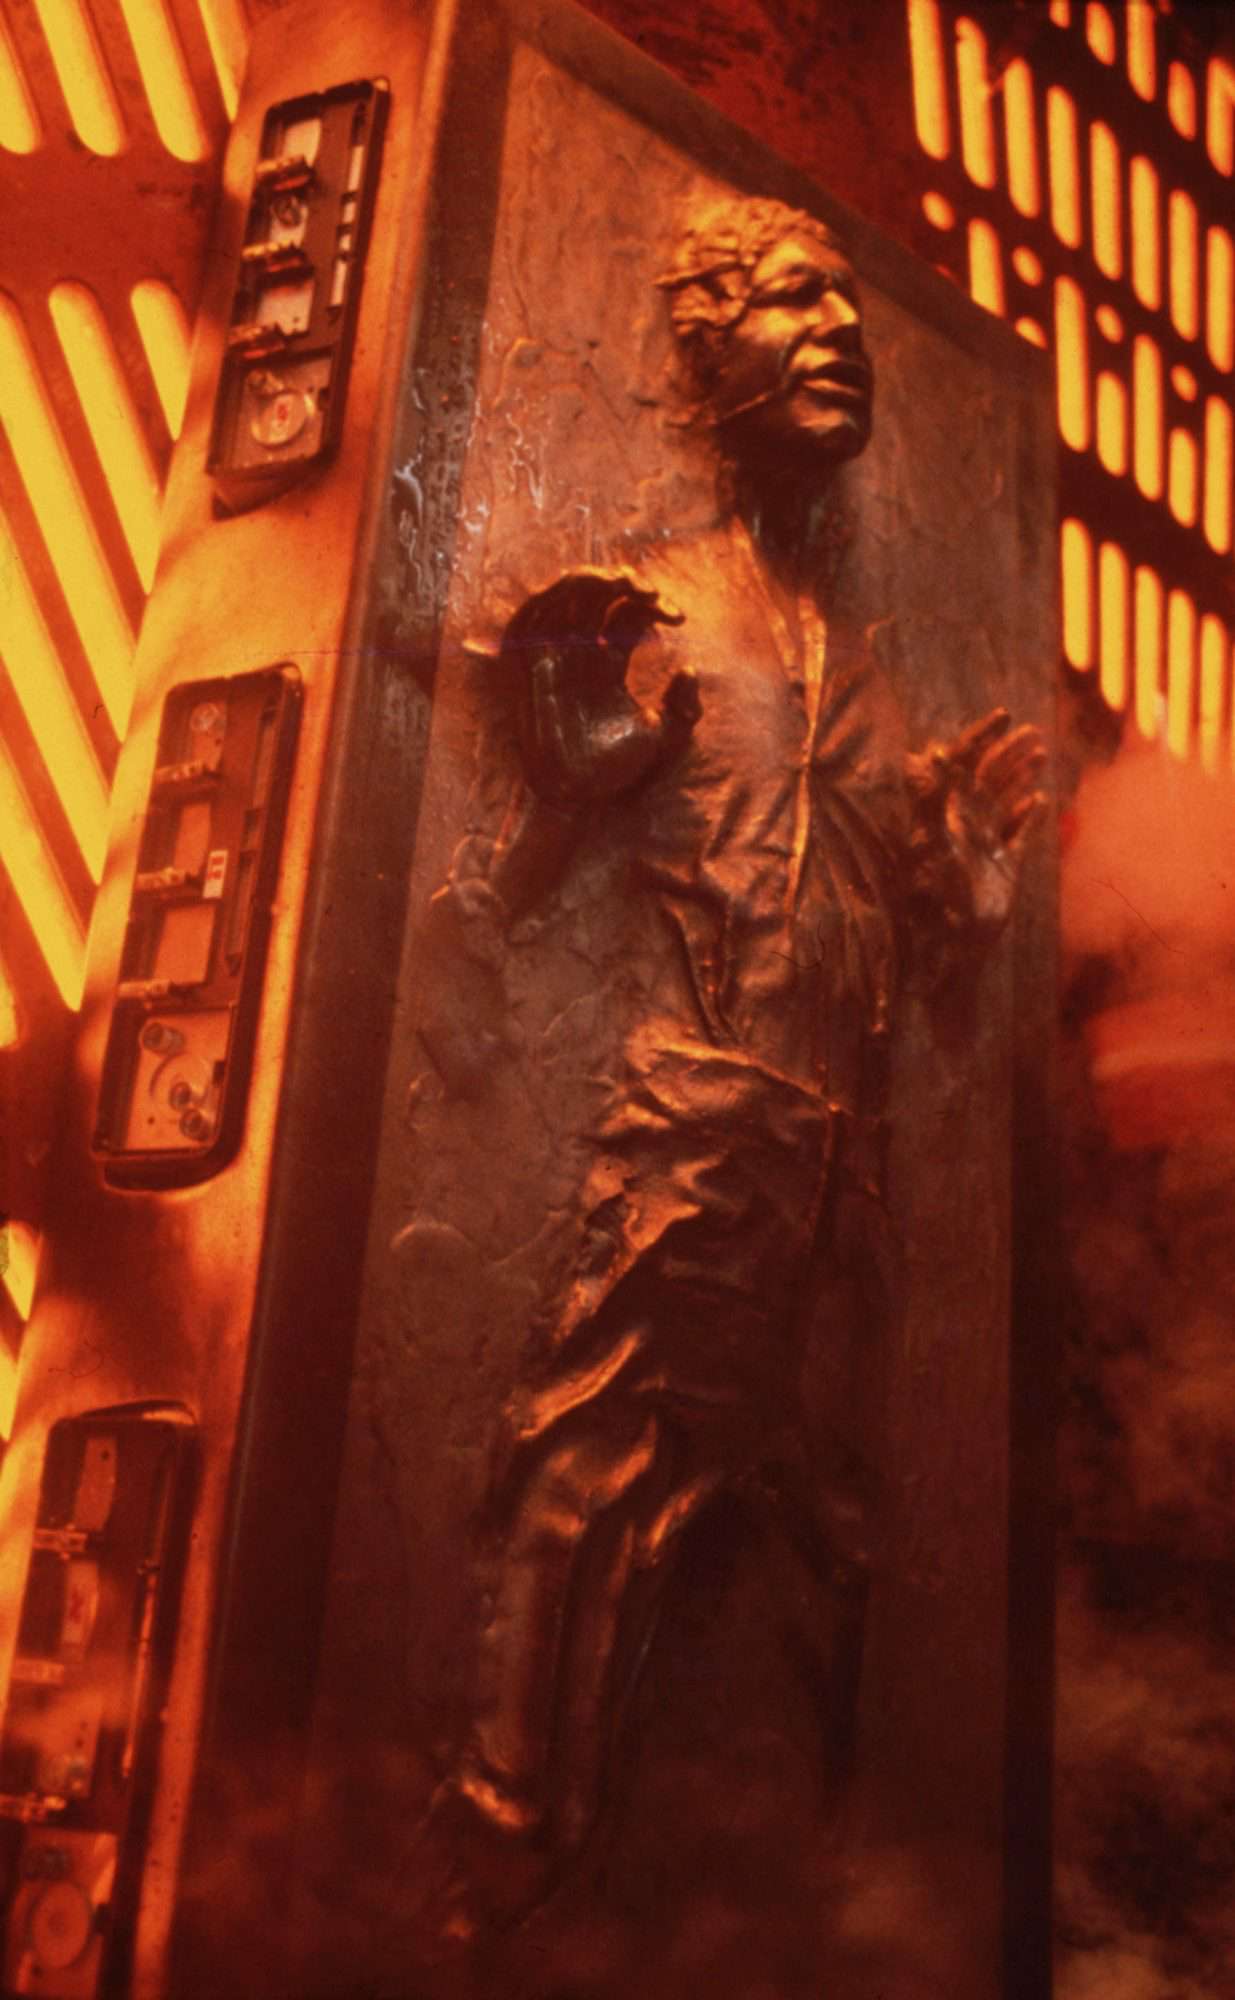 Han Solo frozen in carbonite in 'The Empire Strikes Back'